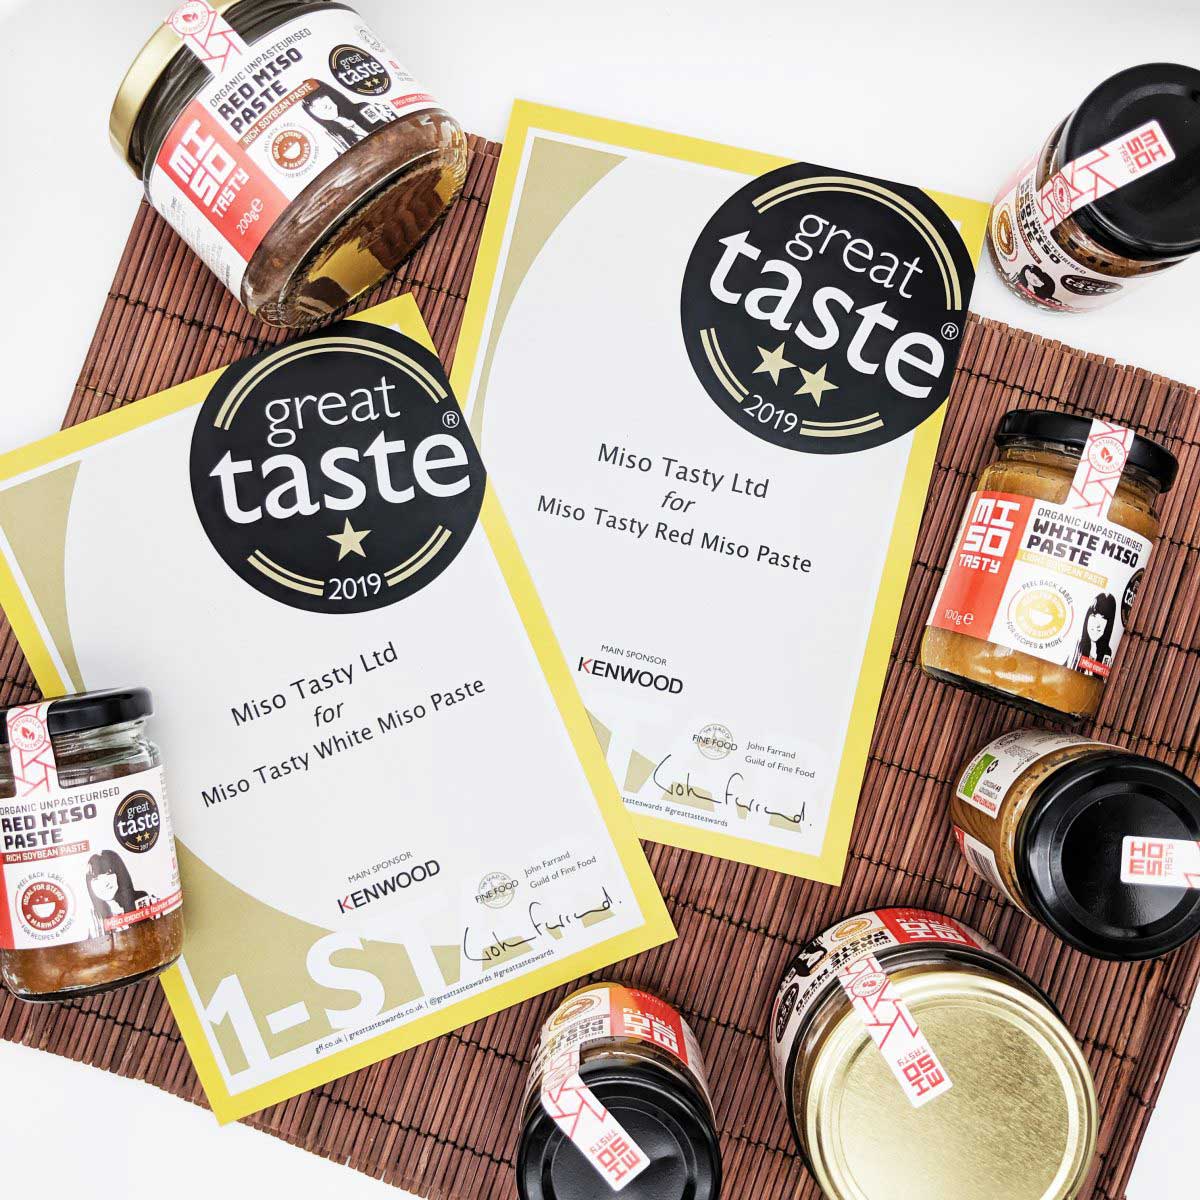 great taste award 2019 for miso tasty red miso paste